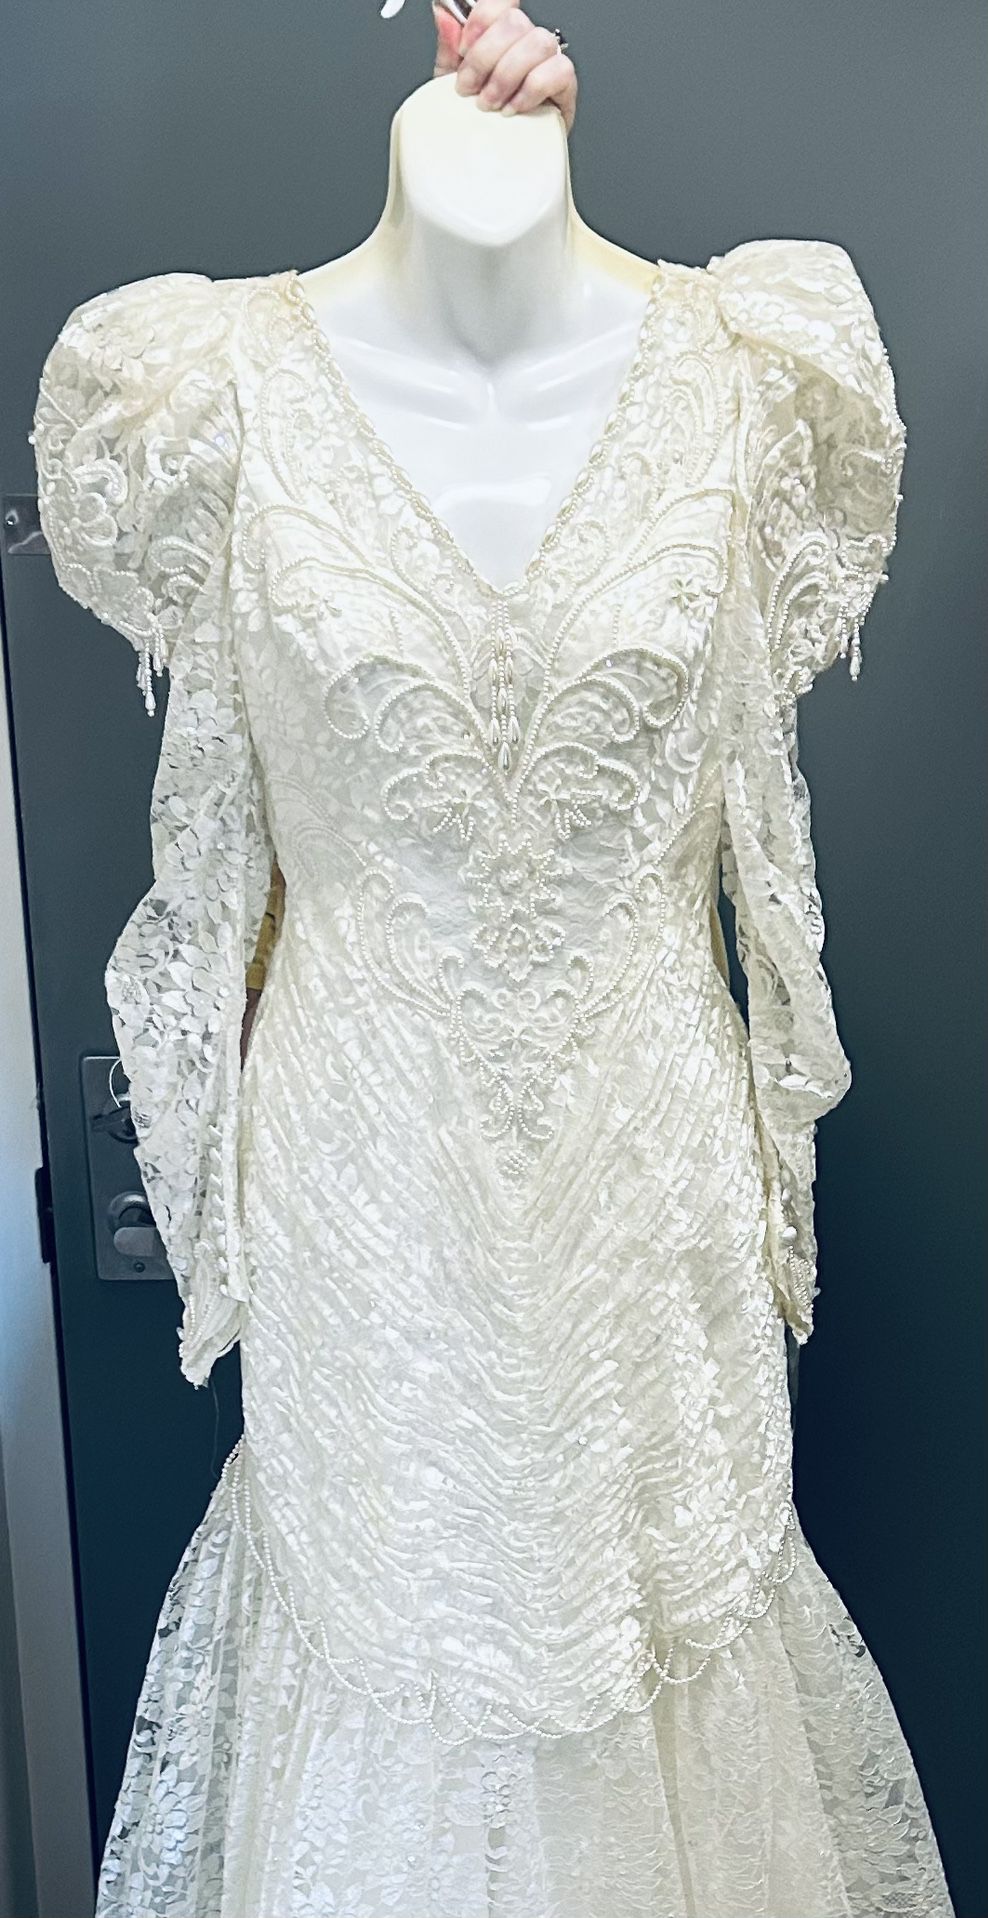 Wedding Dress And Veil White Size 10